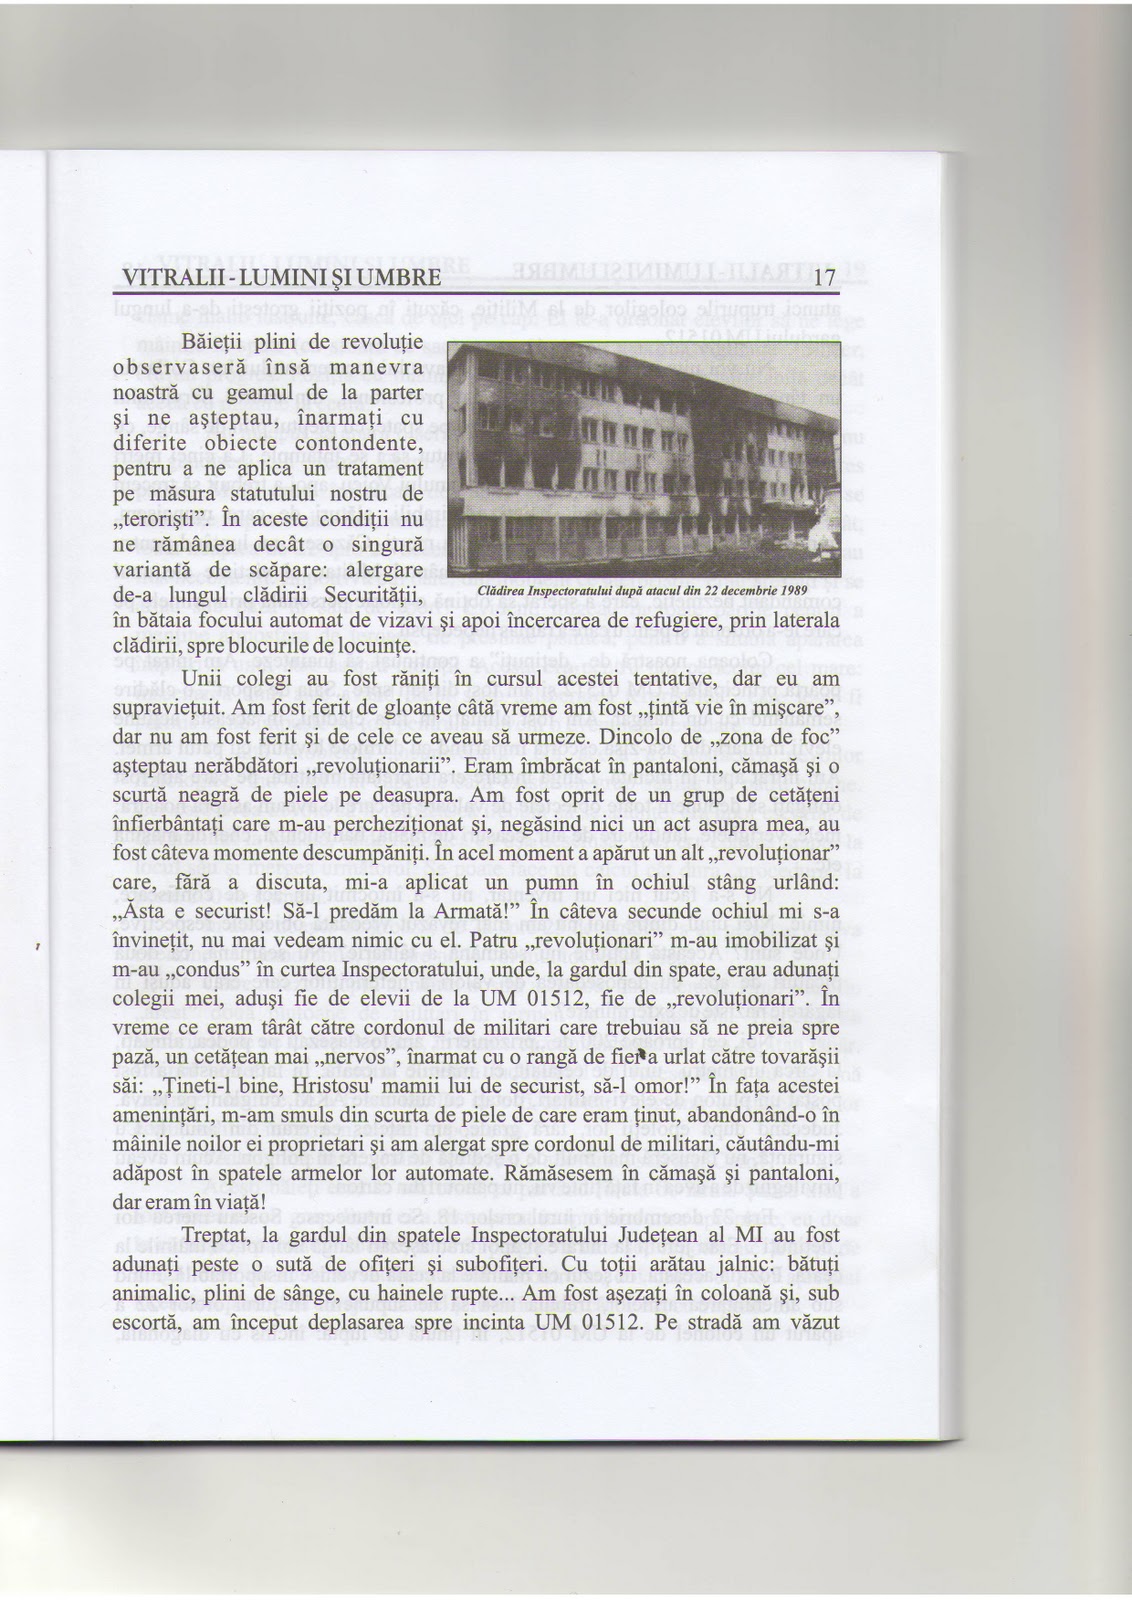 Note Sick person potato 1989: Ororile din bazinul de inot de la SIBIU povestite de un " terorist" .  - huhurez.com